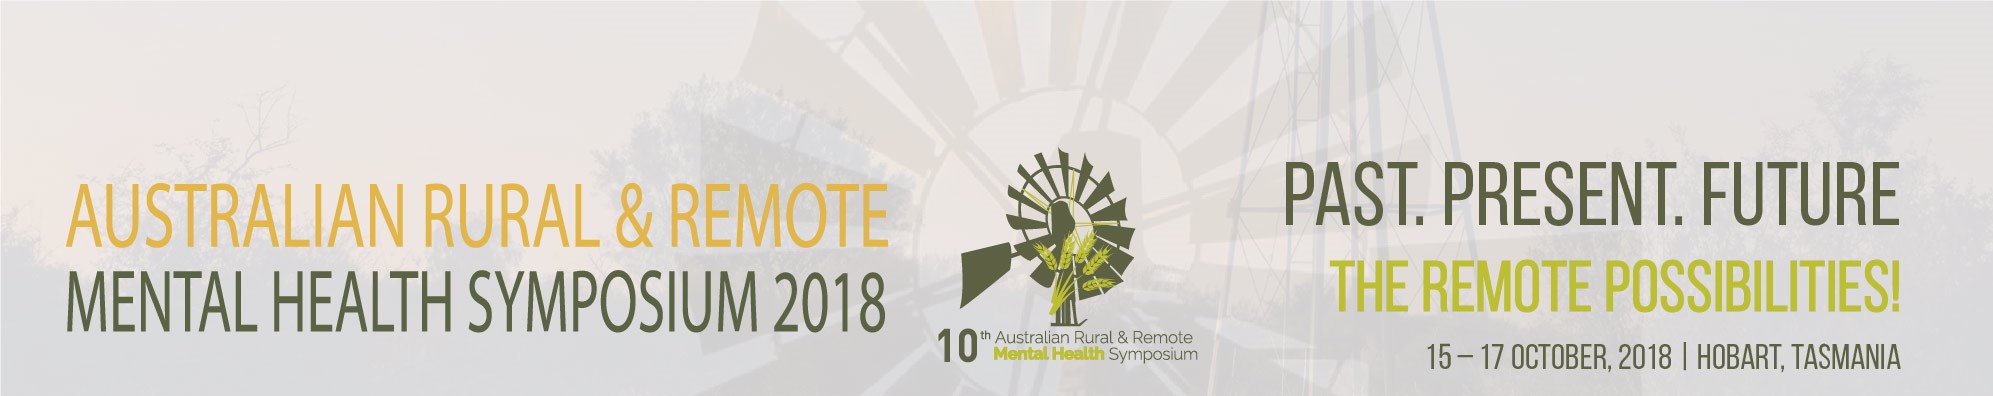 Australian Rural & Remote Mental Health Symposium banner